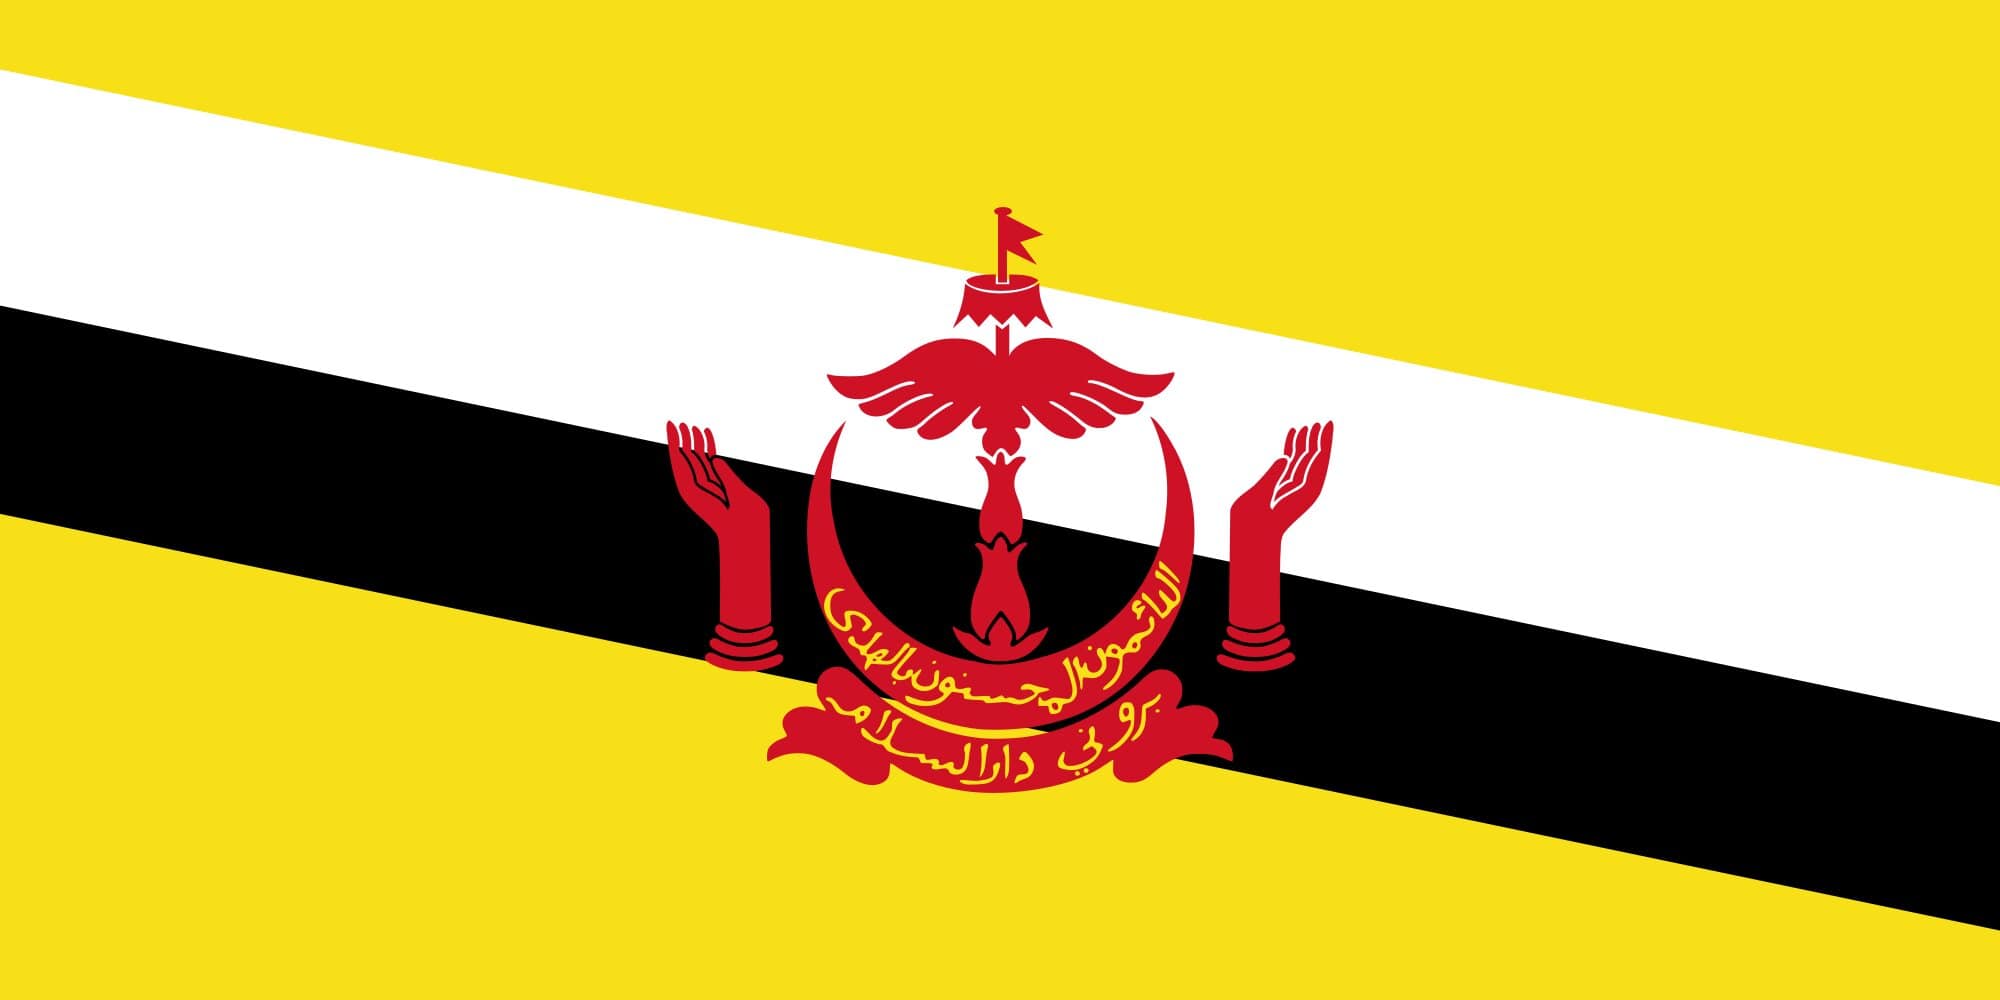 City Names in Brunei